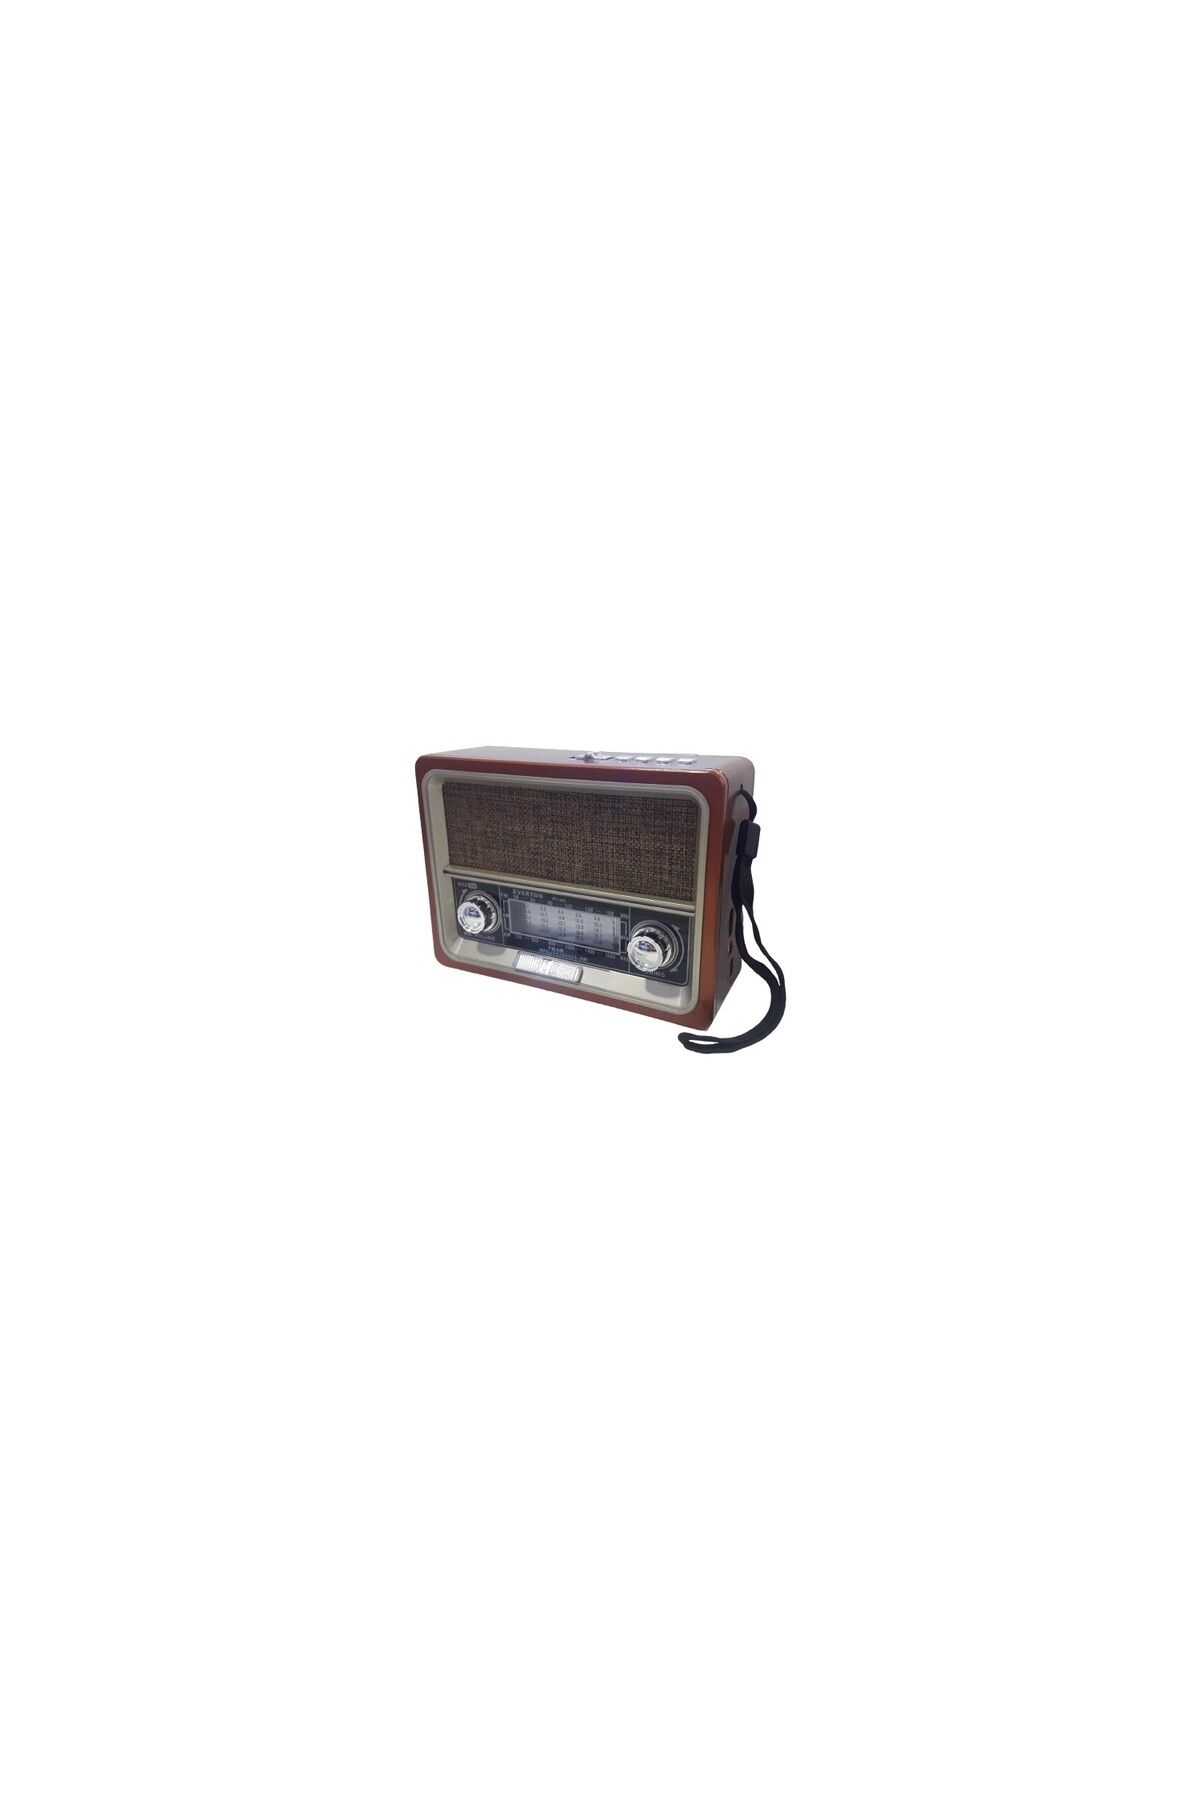 sommeow Rt-305 Nostaljik Bluetooth Radyo